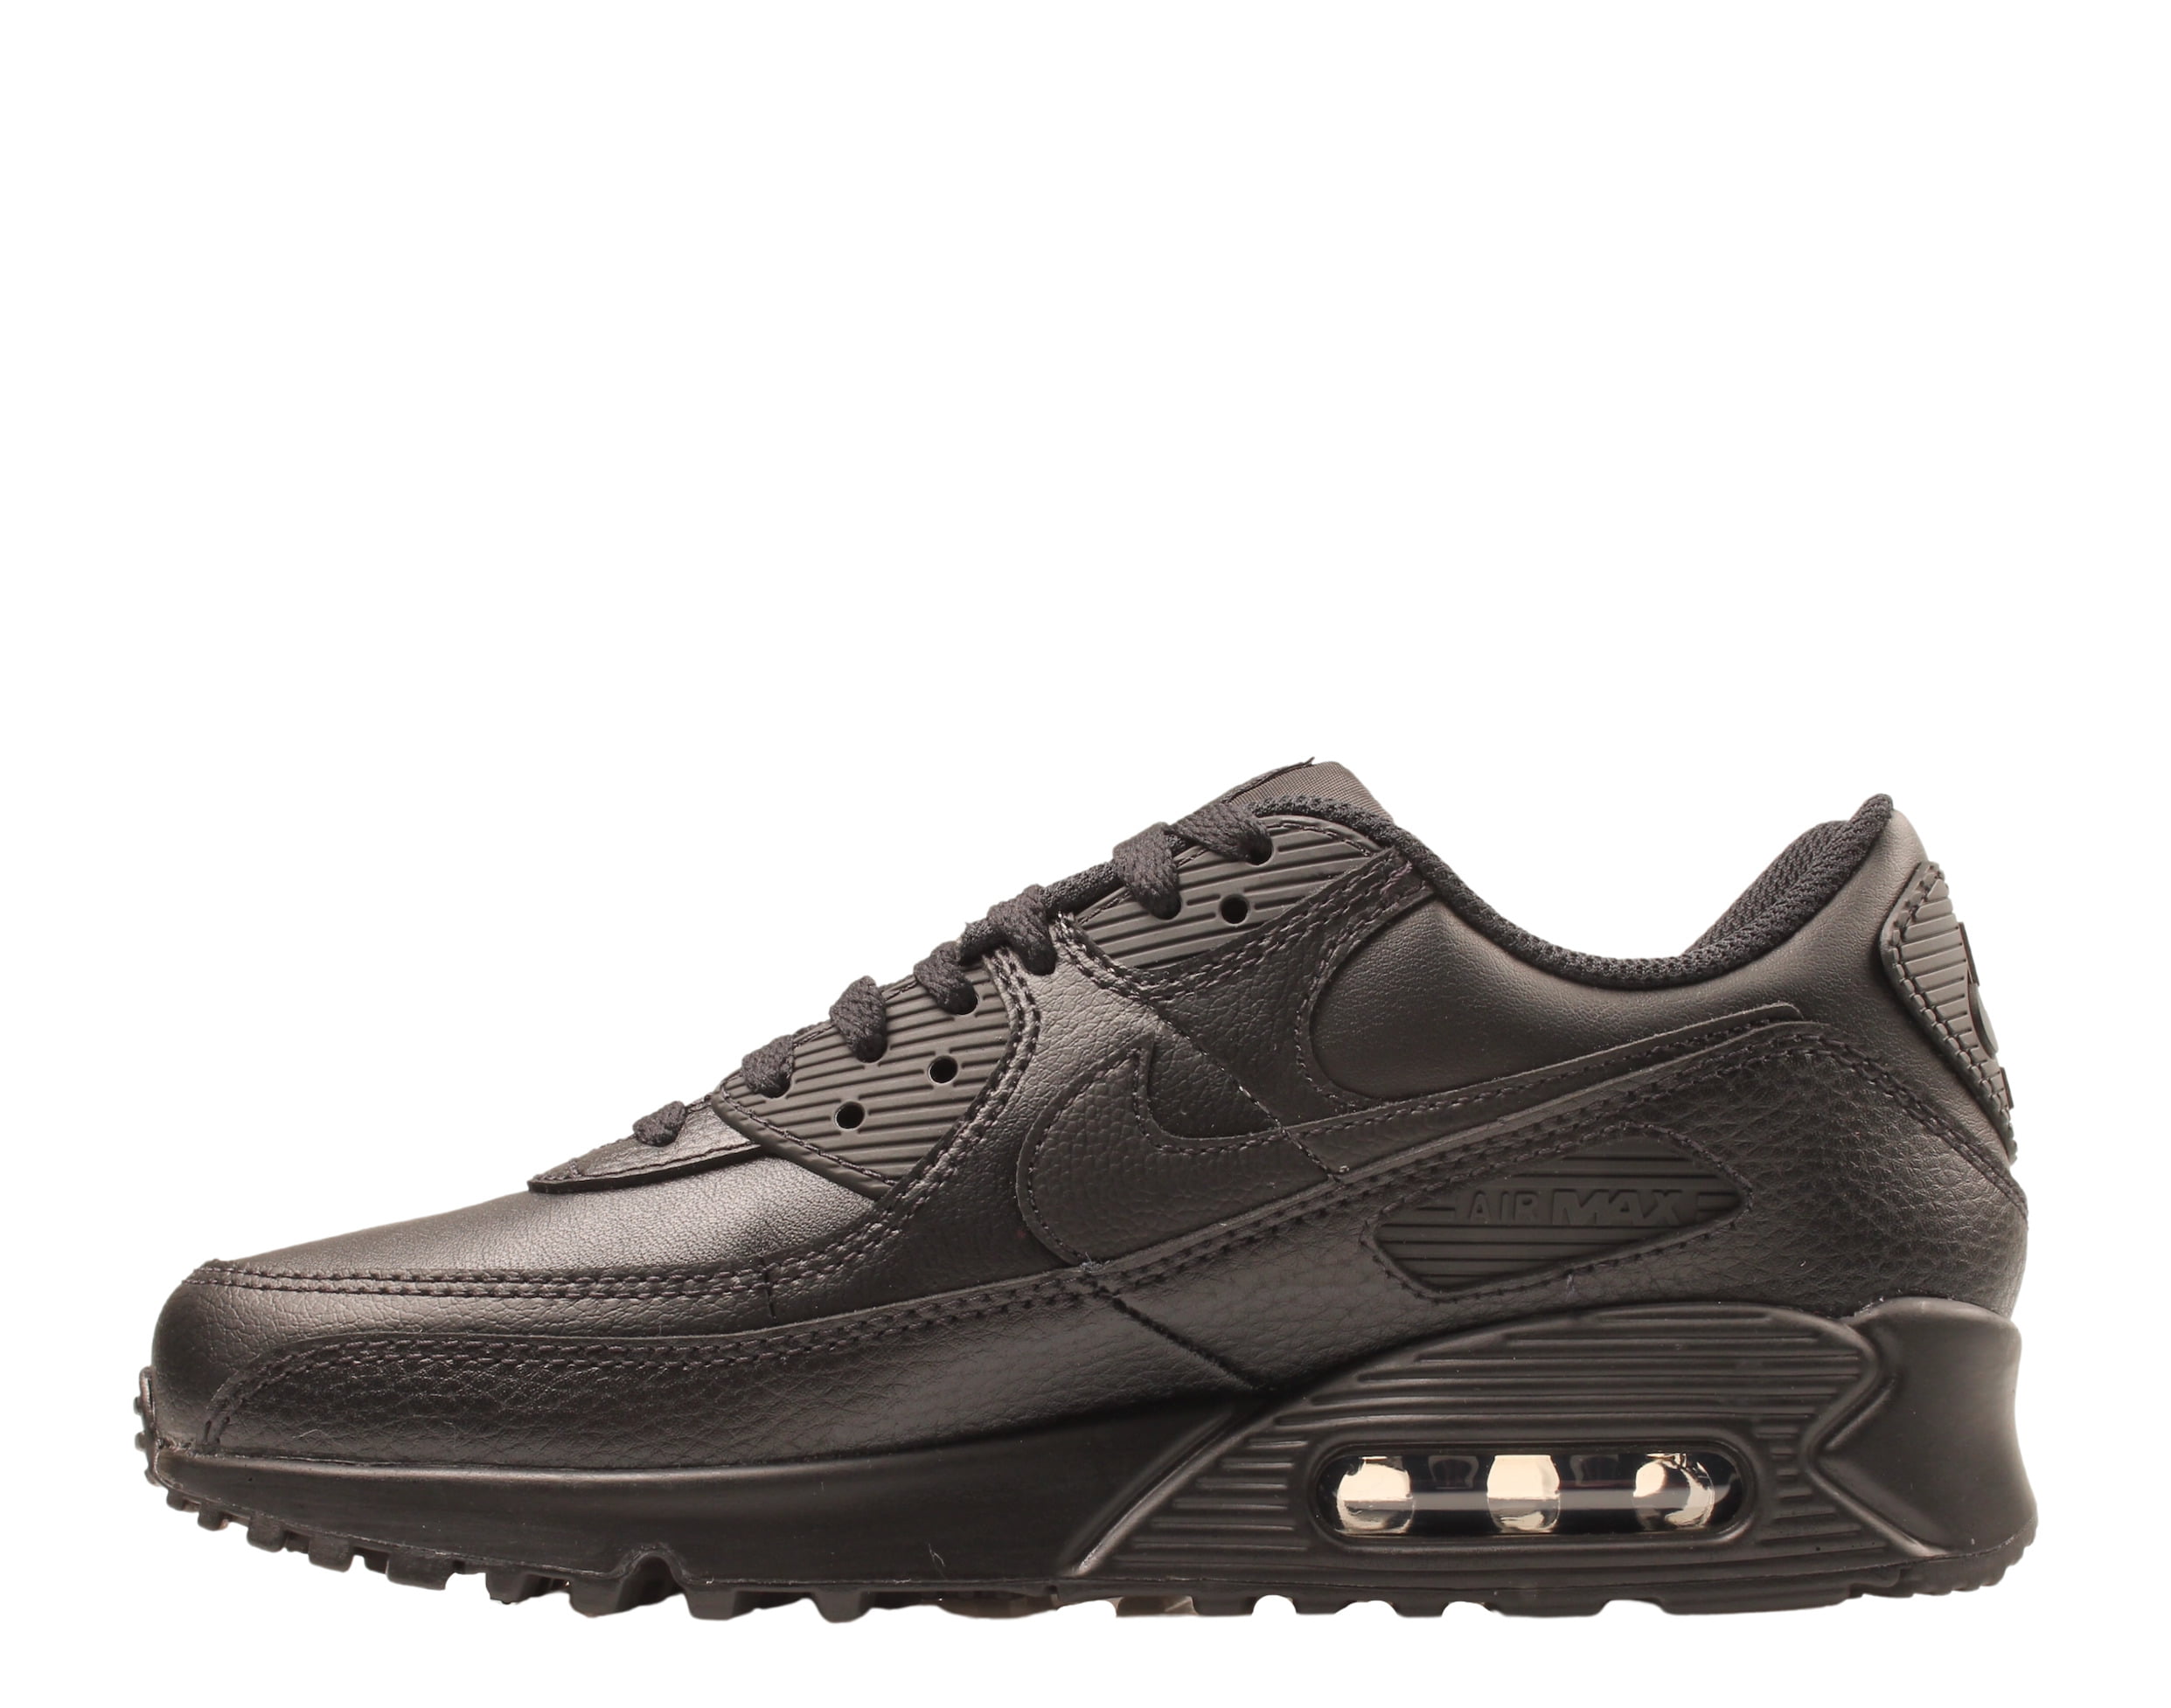 malta Grave rosado Nike Air Max 90 Leather Men's Running Shoes Size 8.5 - Walmart.com